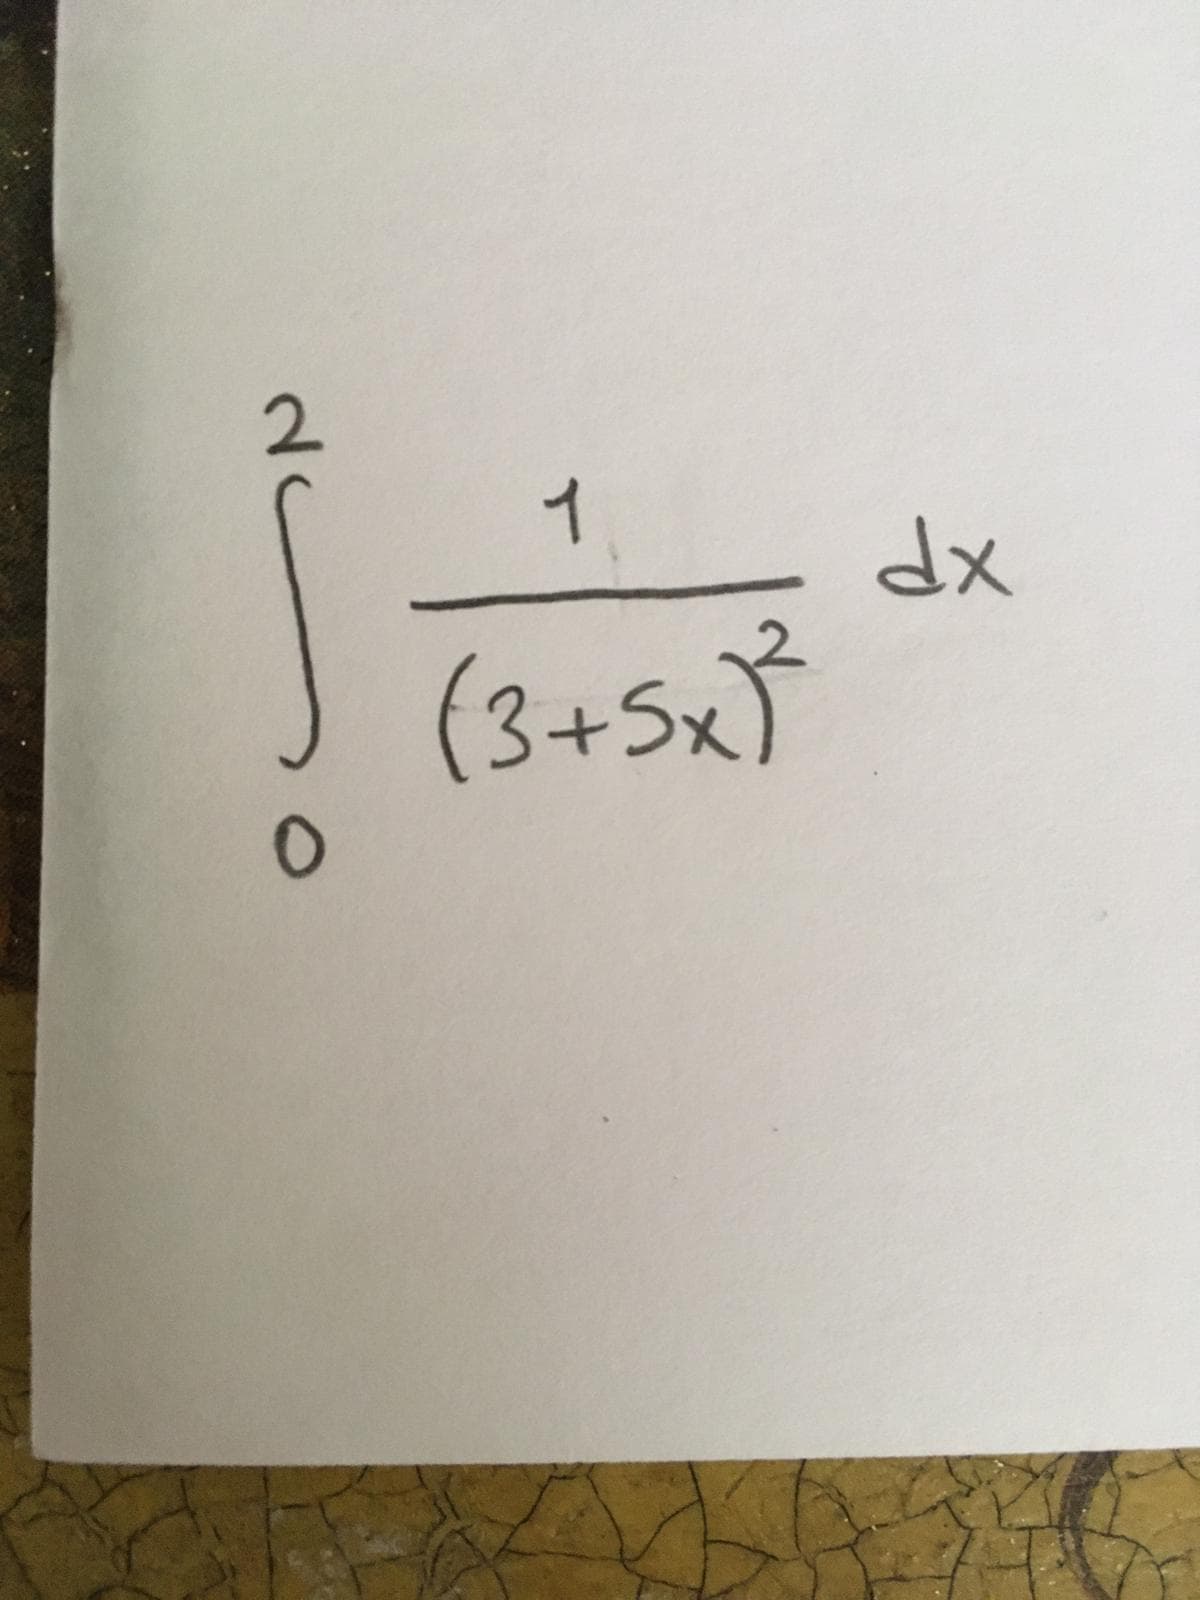 2
1
dx
(3+5x}
